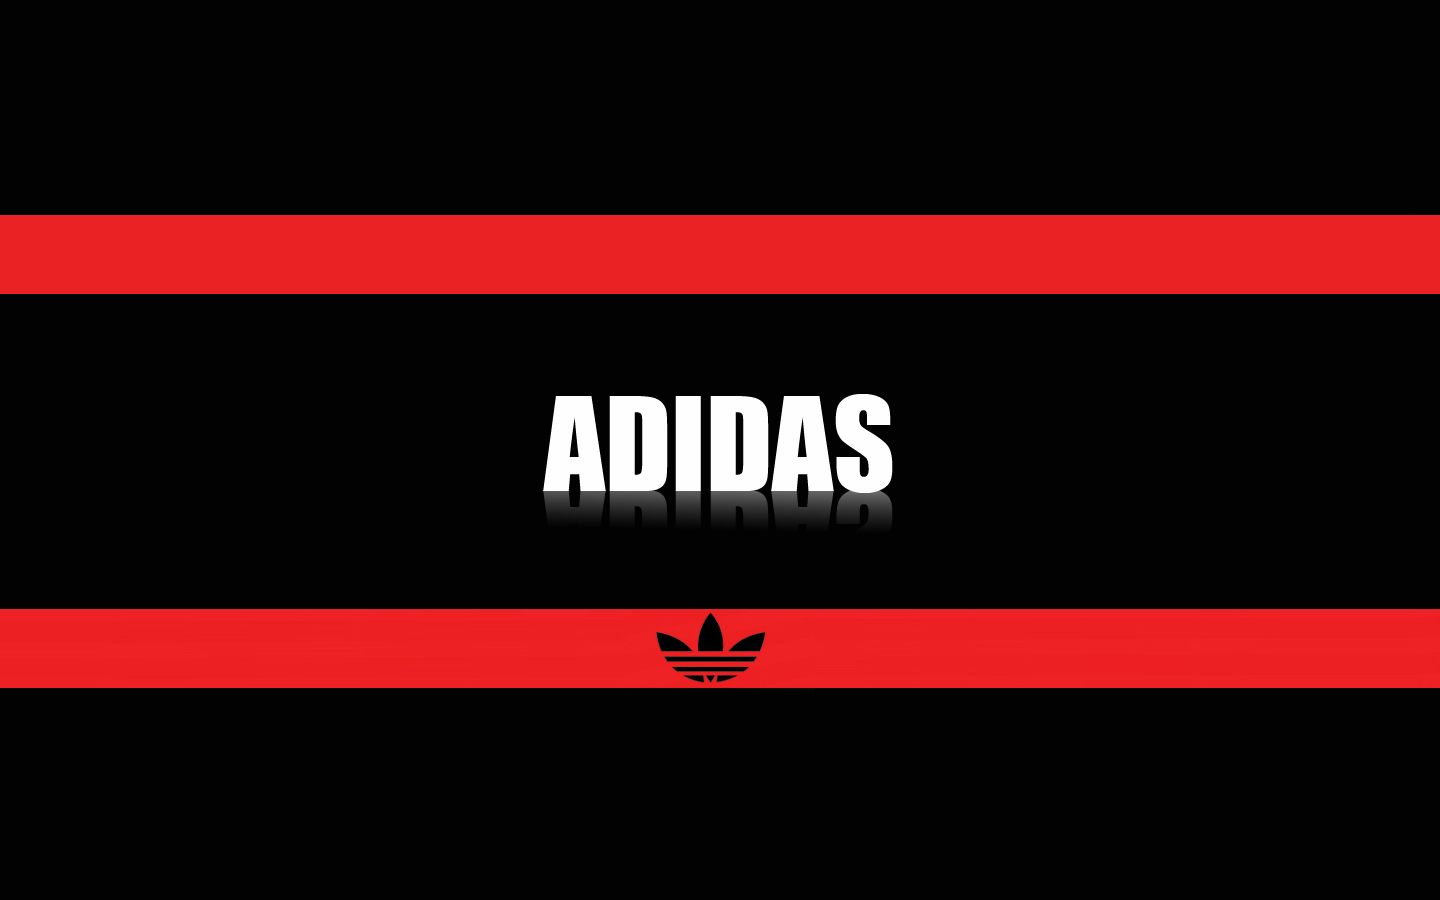 adidas logo Image HD Wallpapers, Page 0